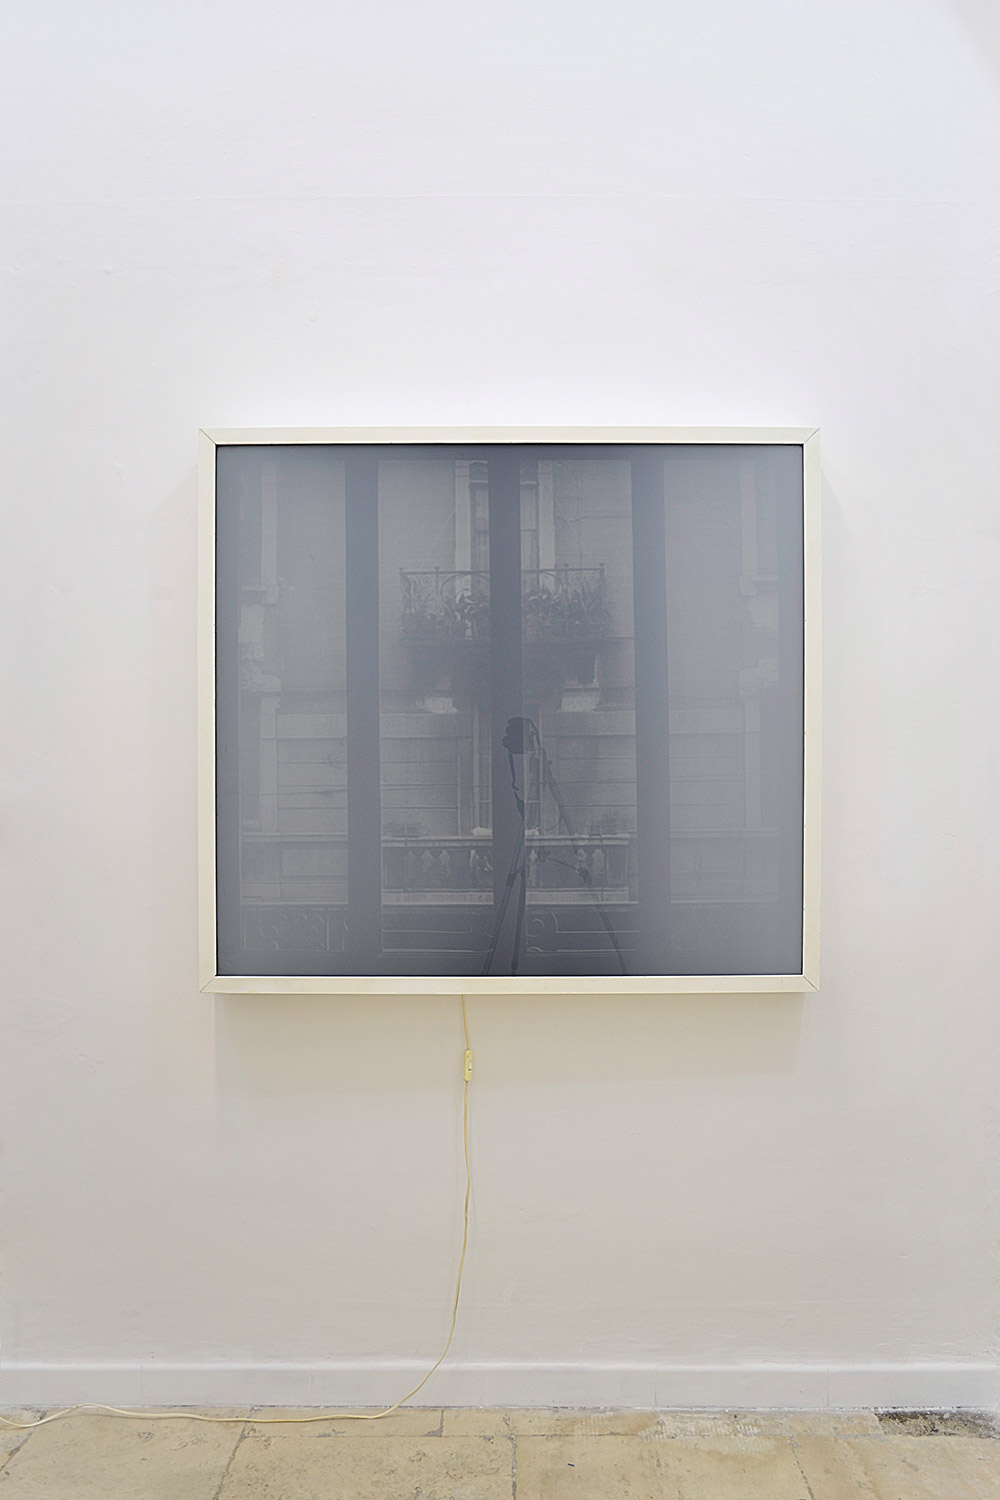 Antonio Trotta, Finestra su vetro, 1972, light box, emulsion on glass, 120x120x12 cm (OFF)